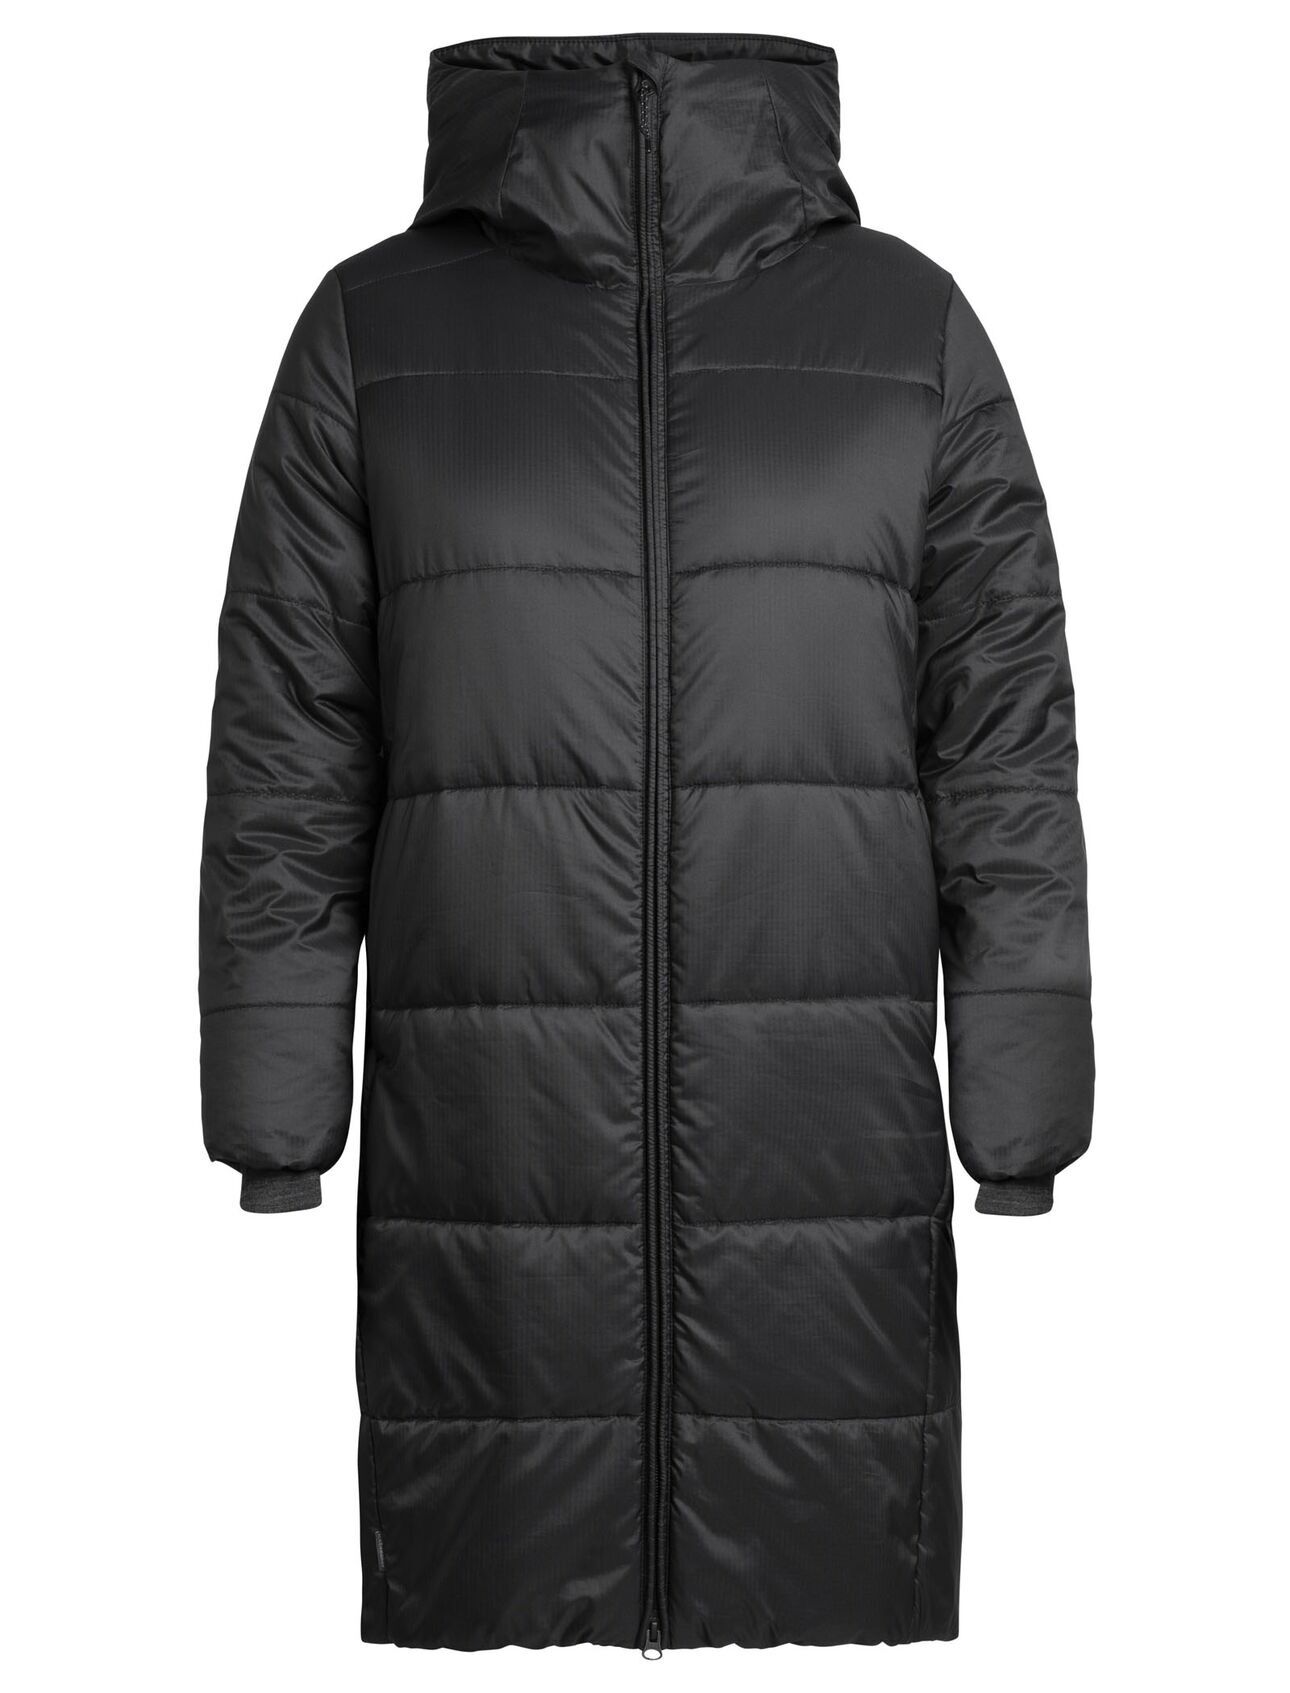 Icebreaker Collingwood 3Q Hooded Jacket, vinterjakke dame Black 104888-001 S 2019